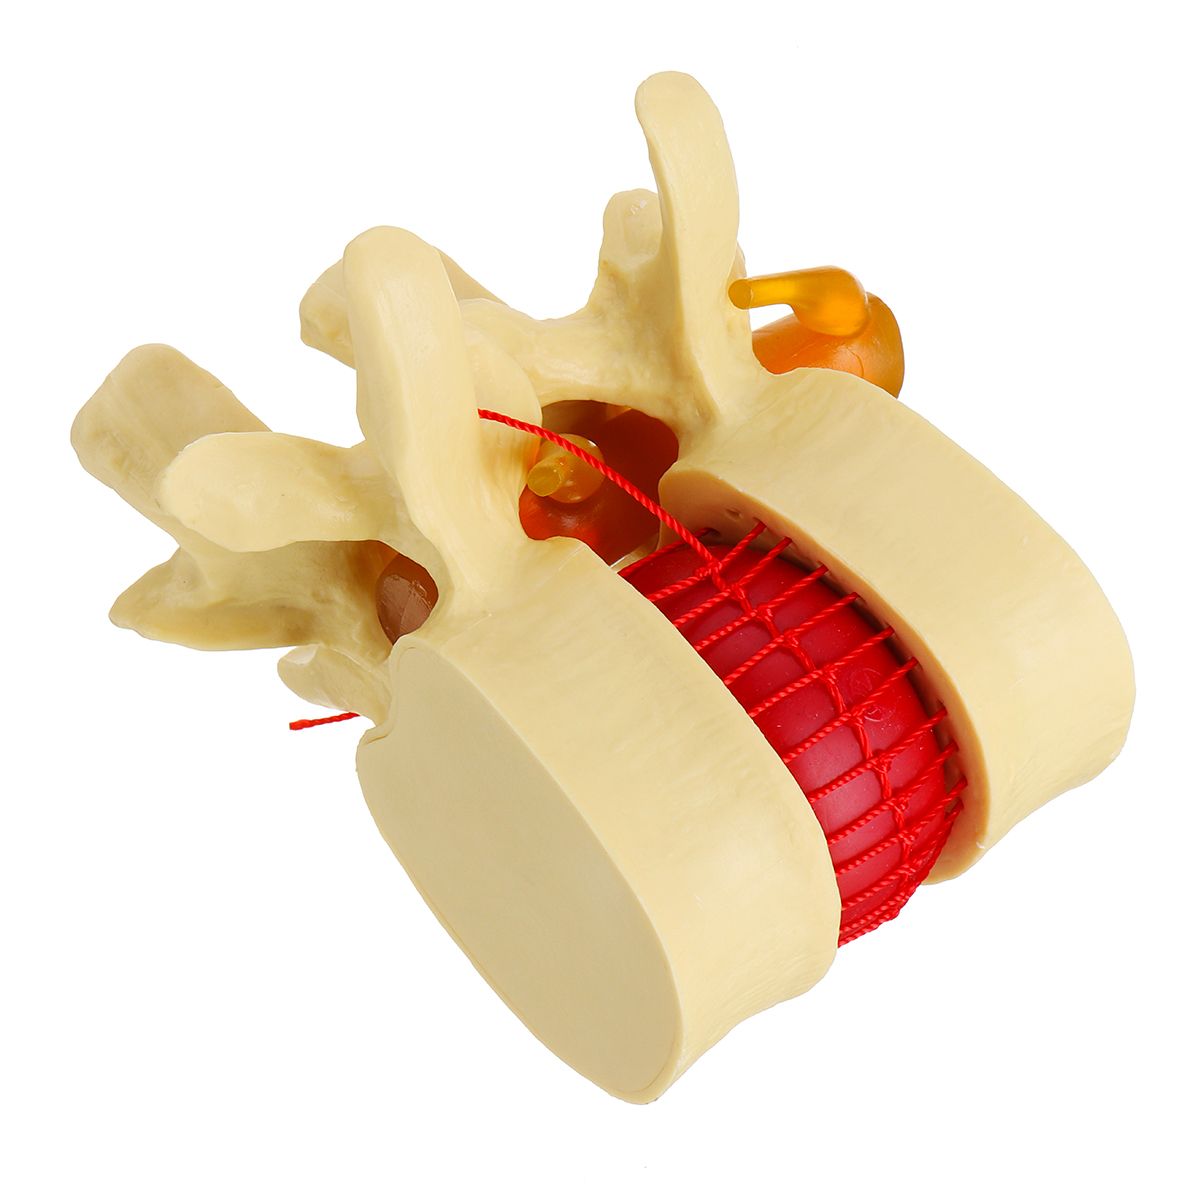 Anatomical-Human-Skeleton-Spine-Lumbar-Vertebrae-Degenerative-Disc-Medical-Model-1532845